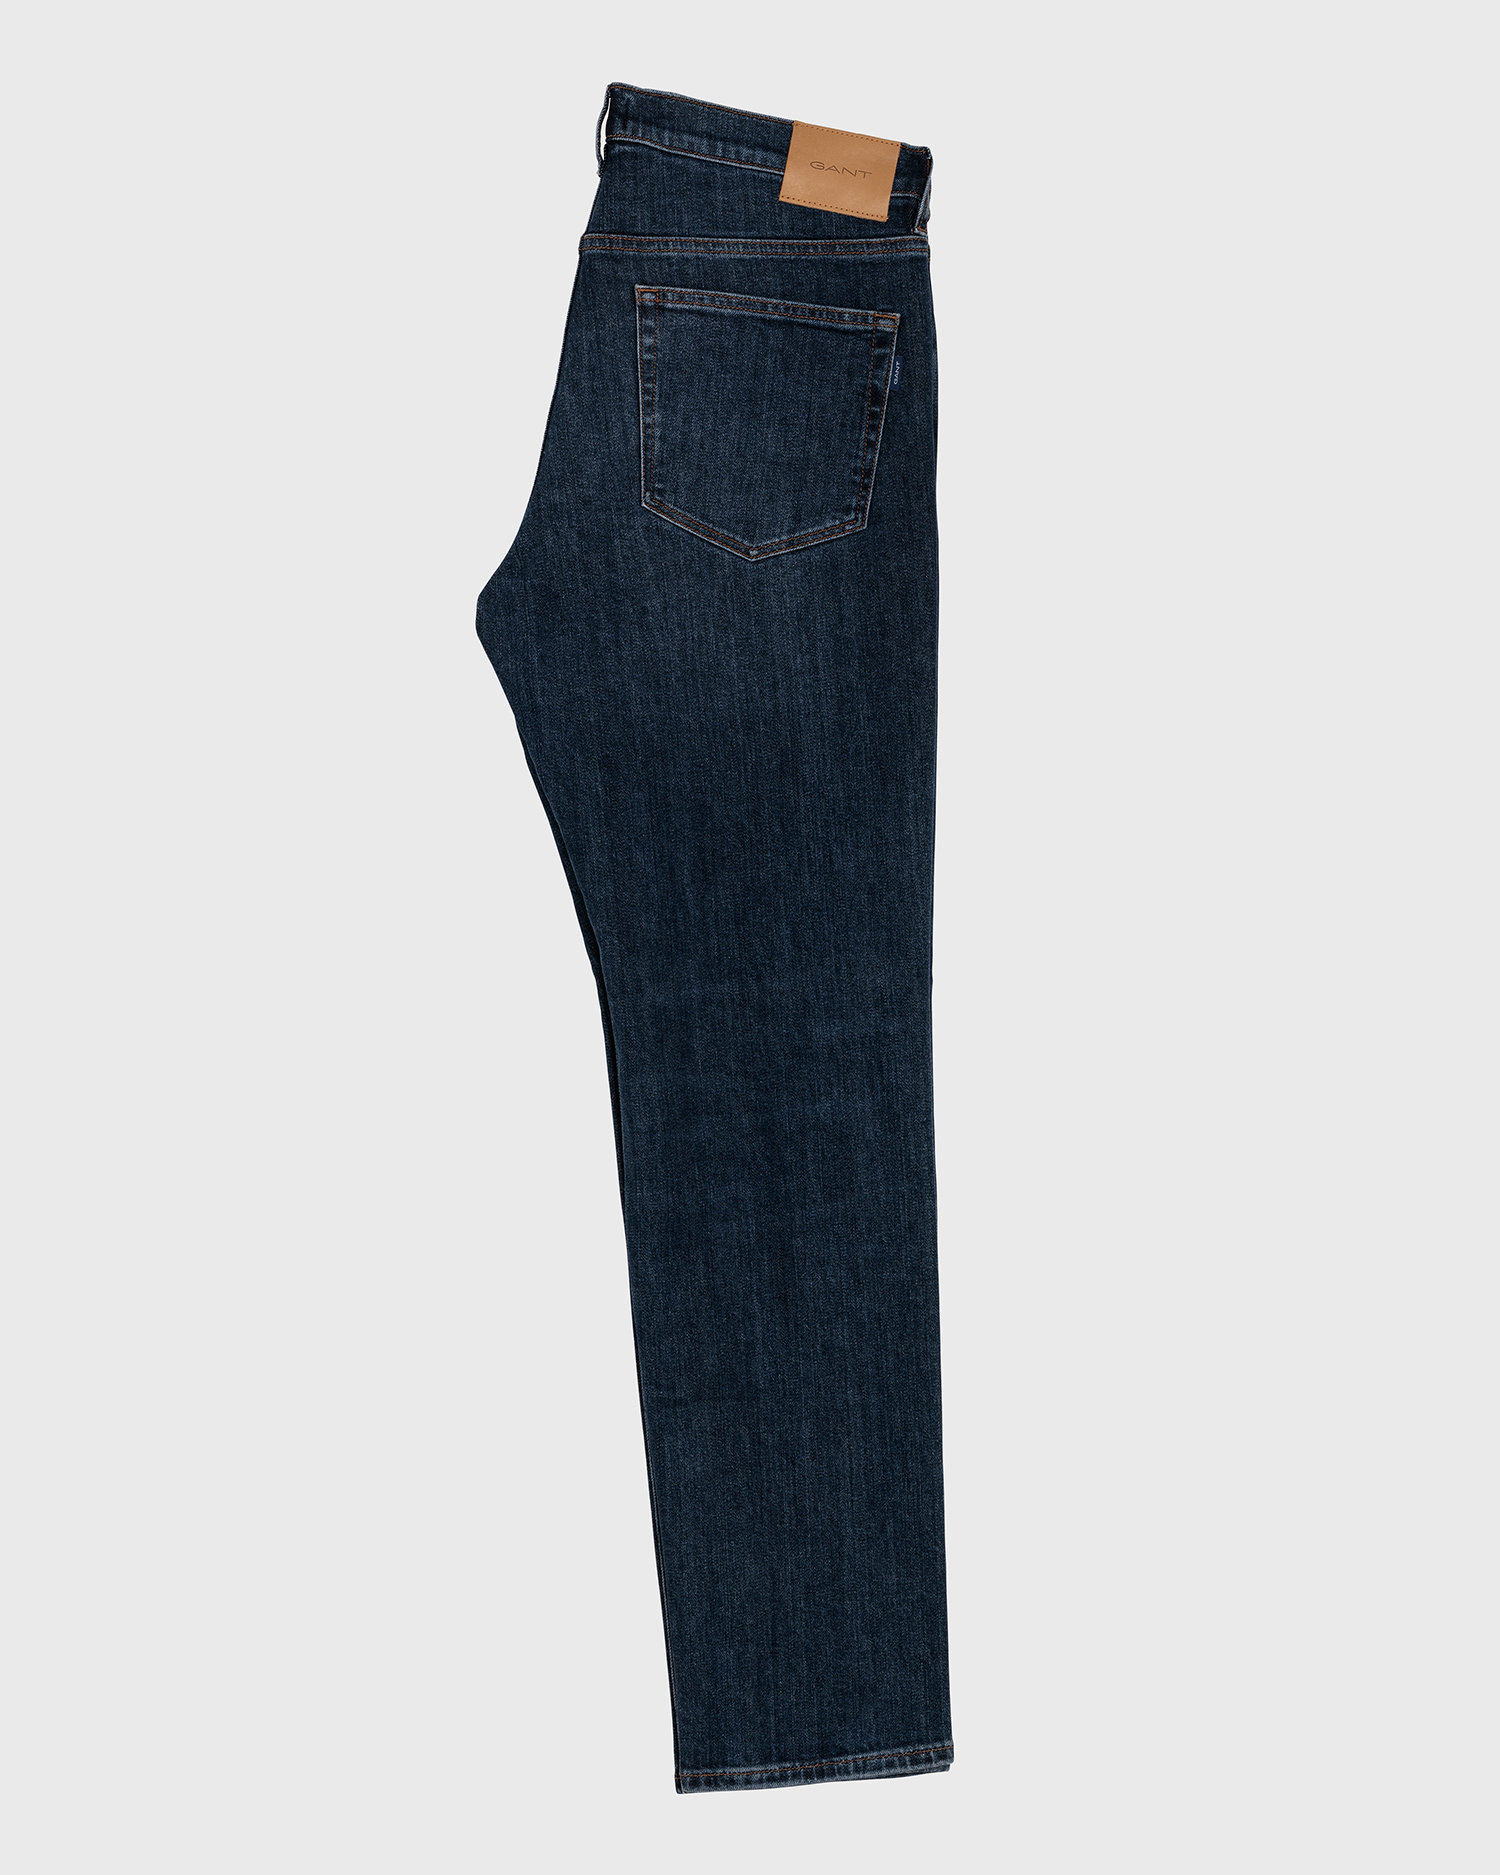 Slim Fit Jean  - Stone Wash - Size28